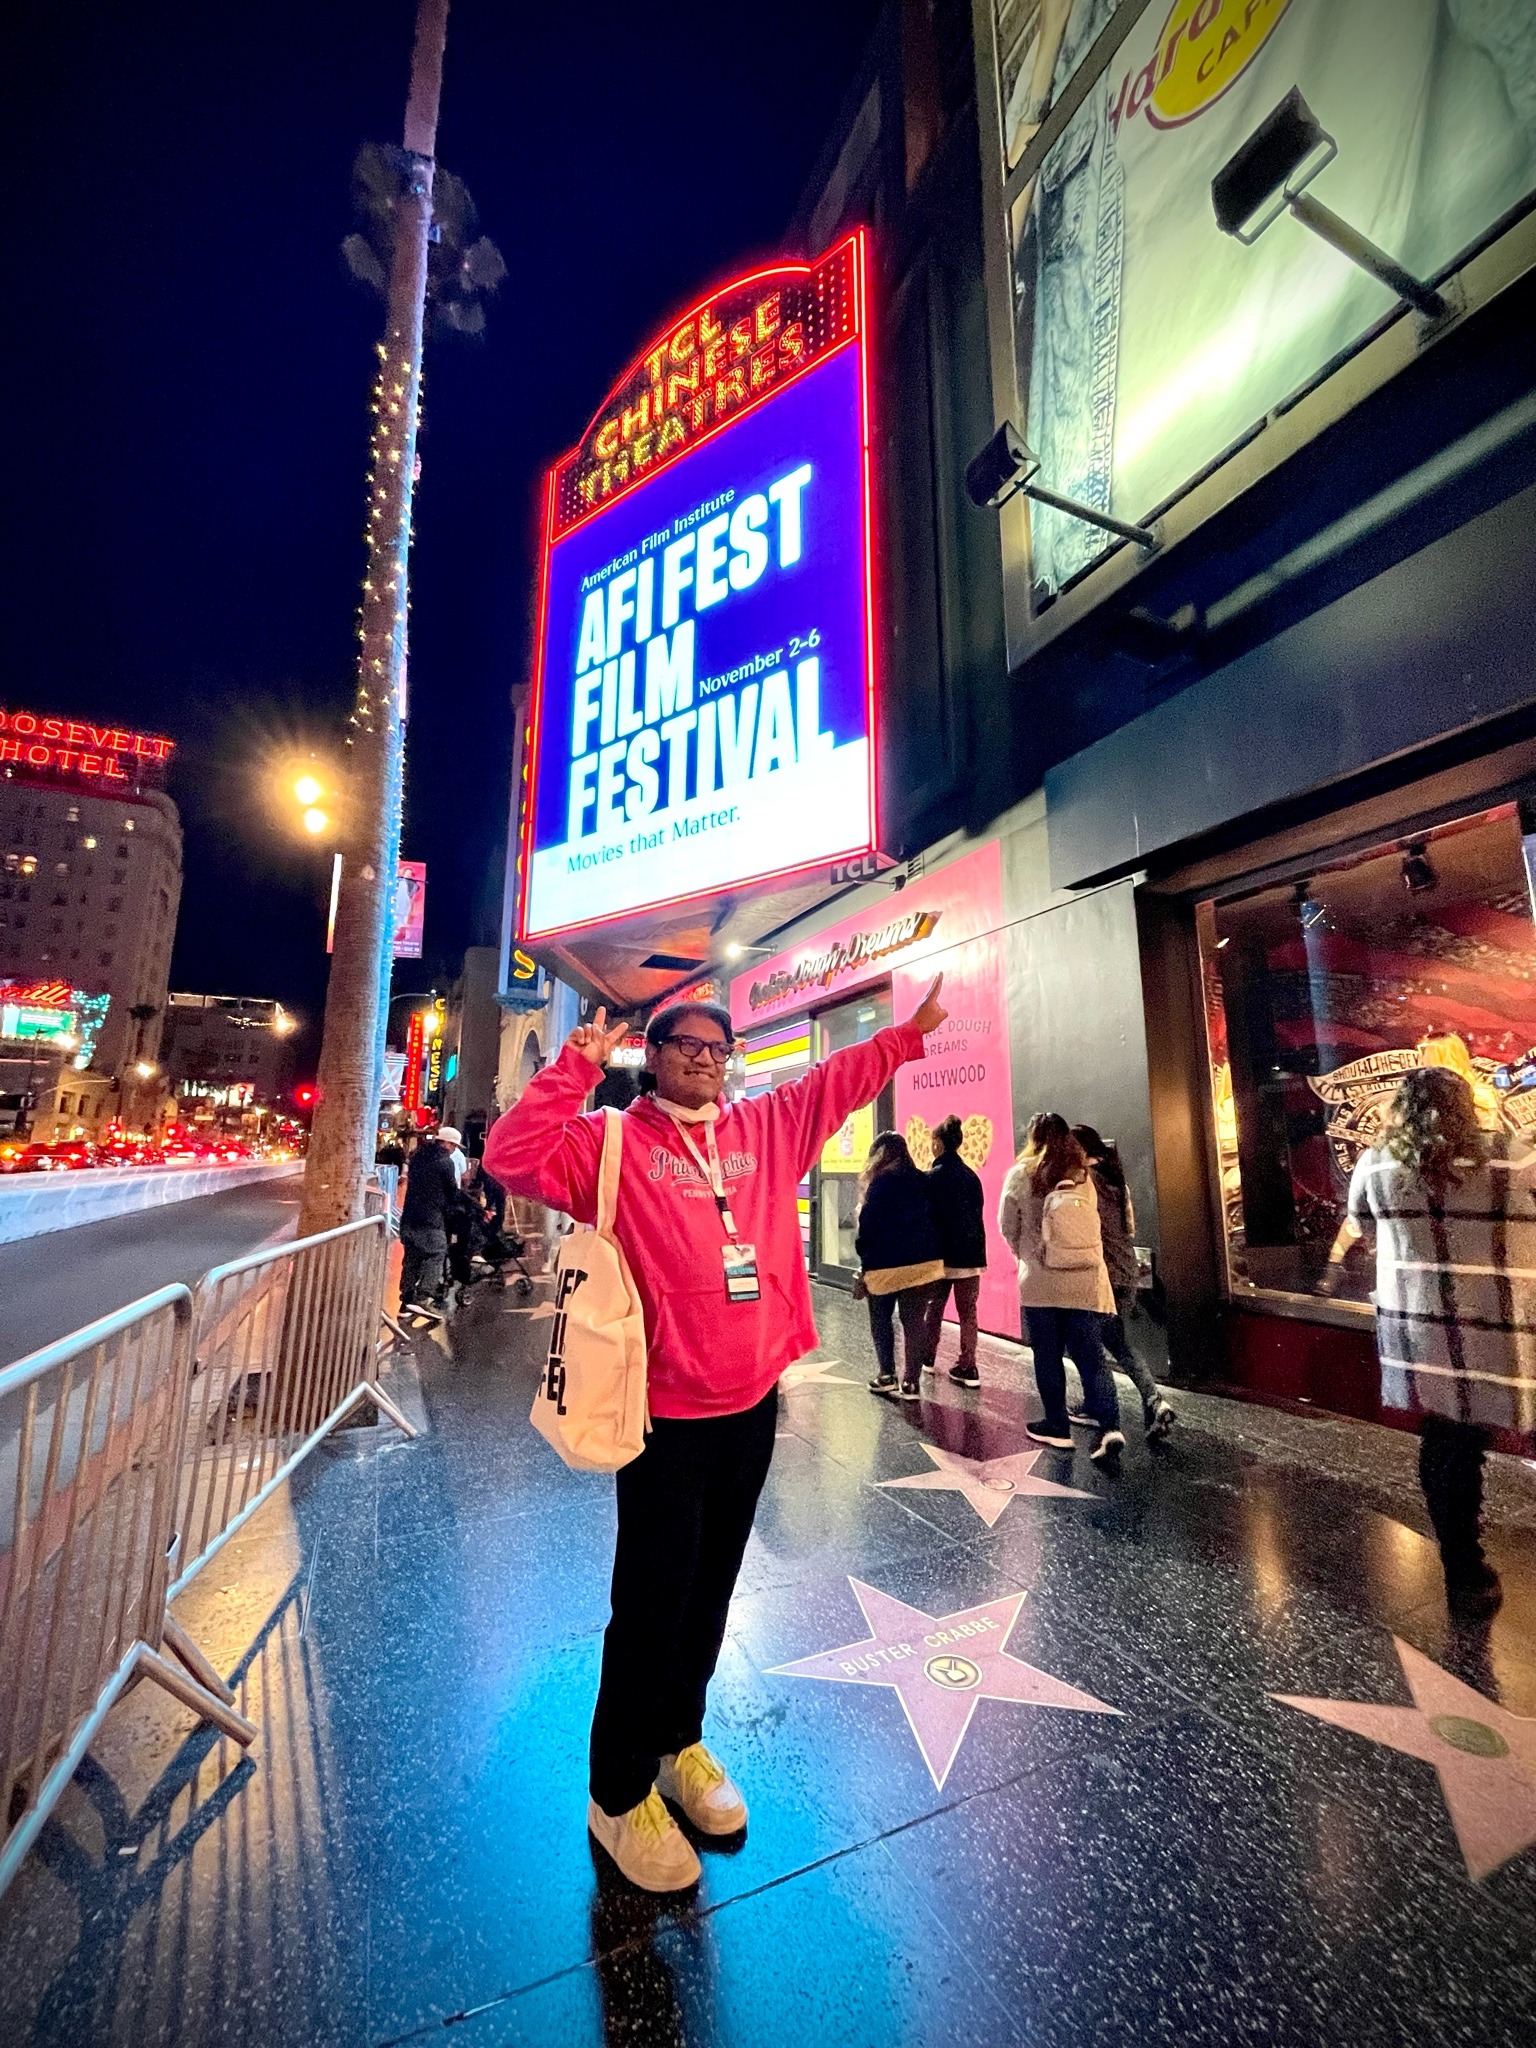 AFI Film Fest street sign